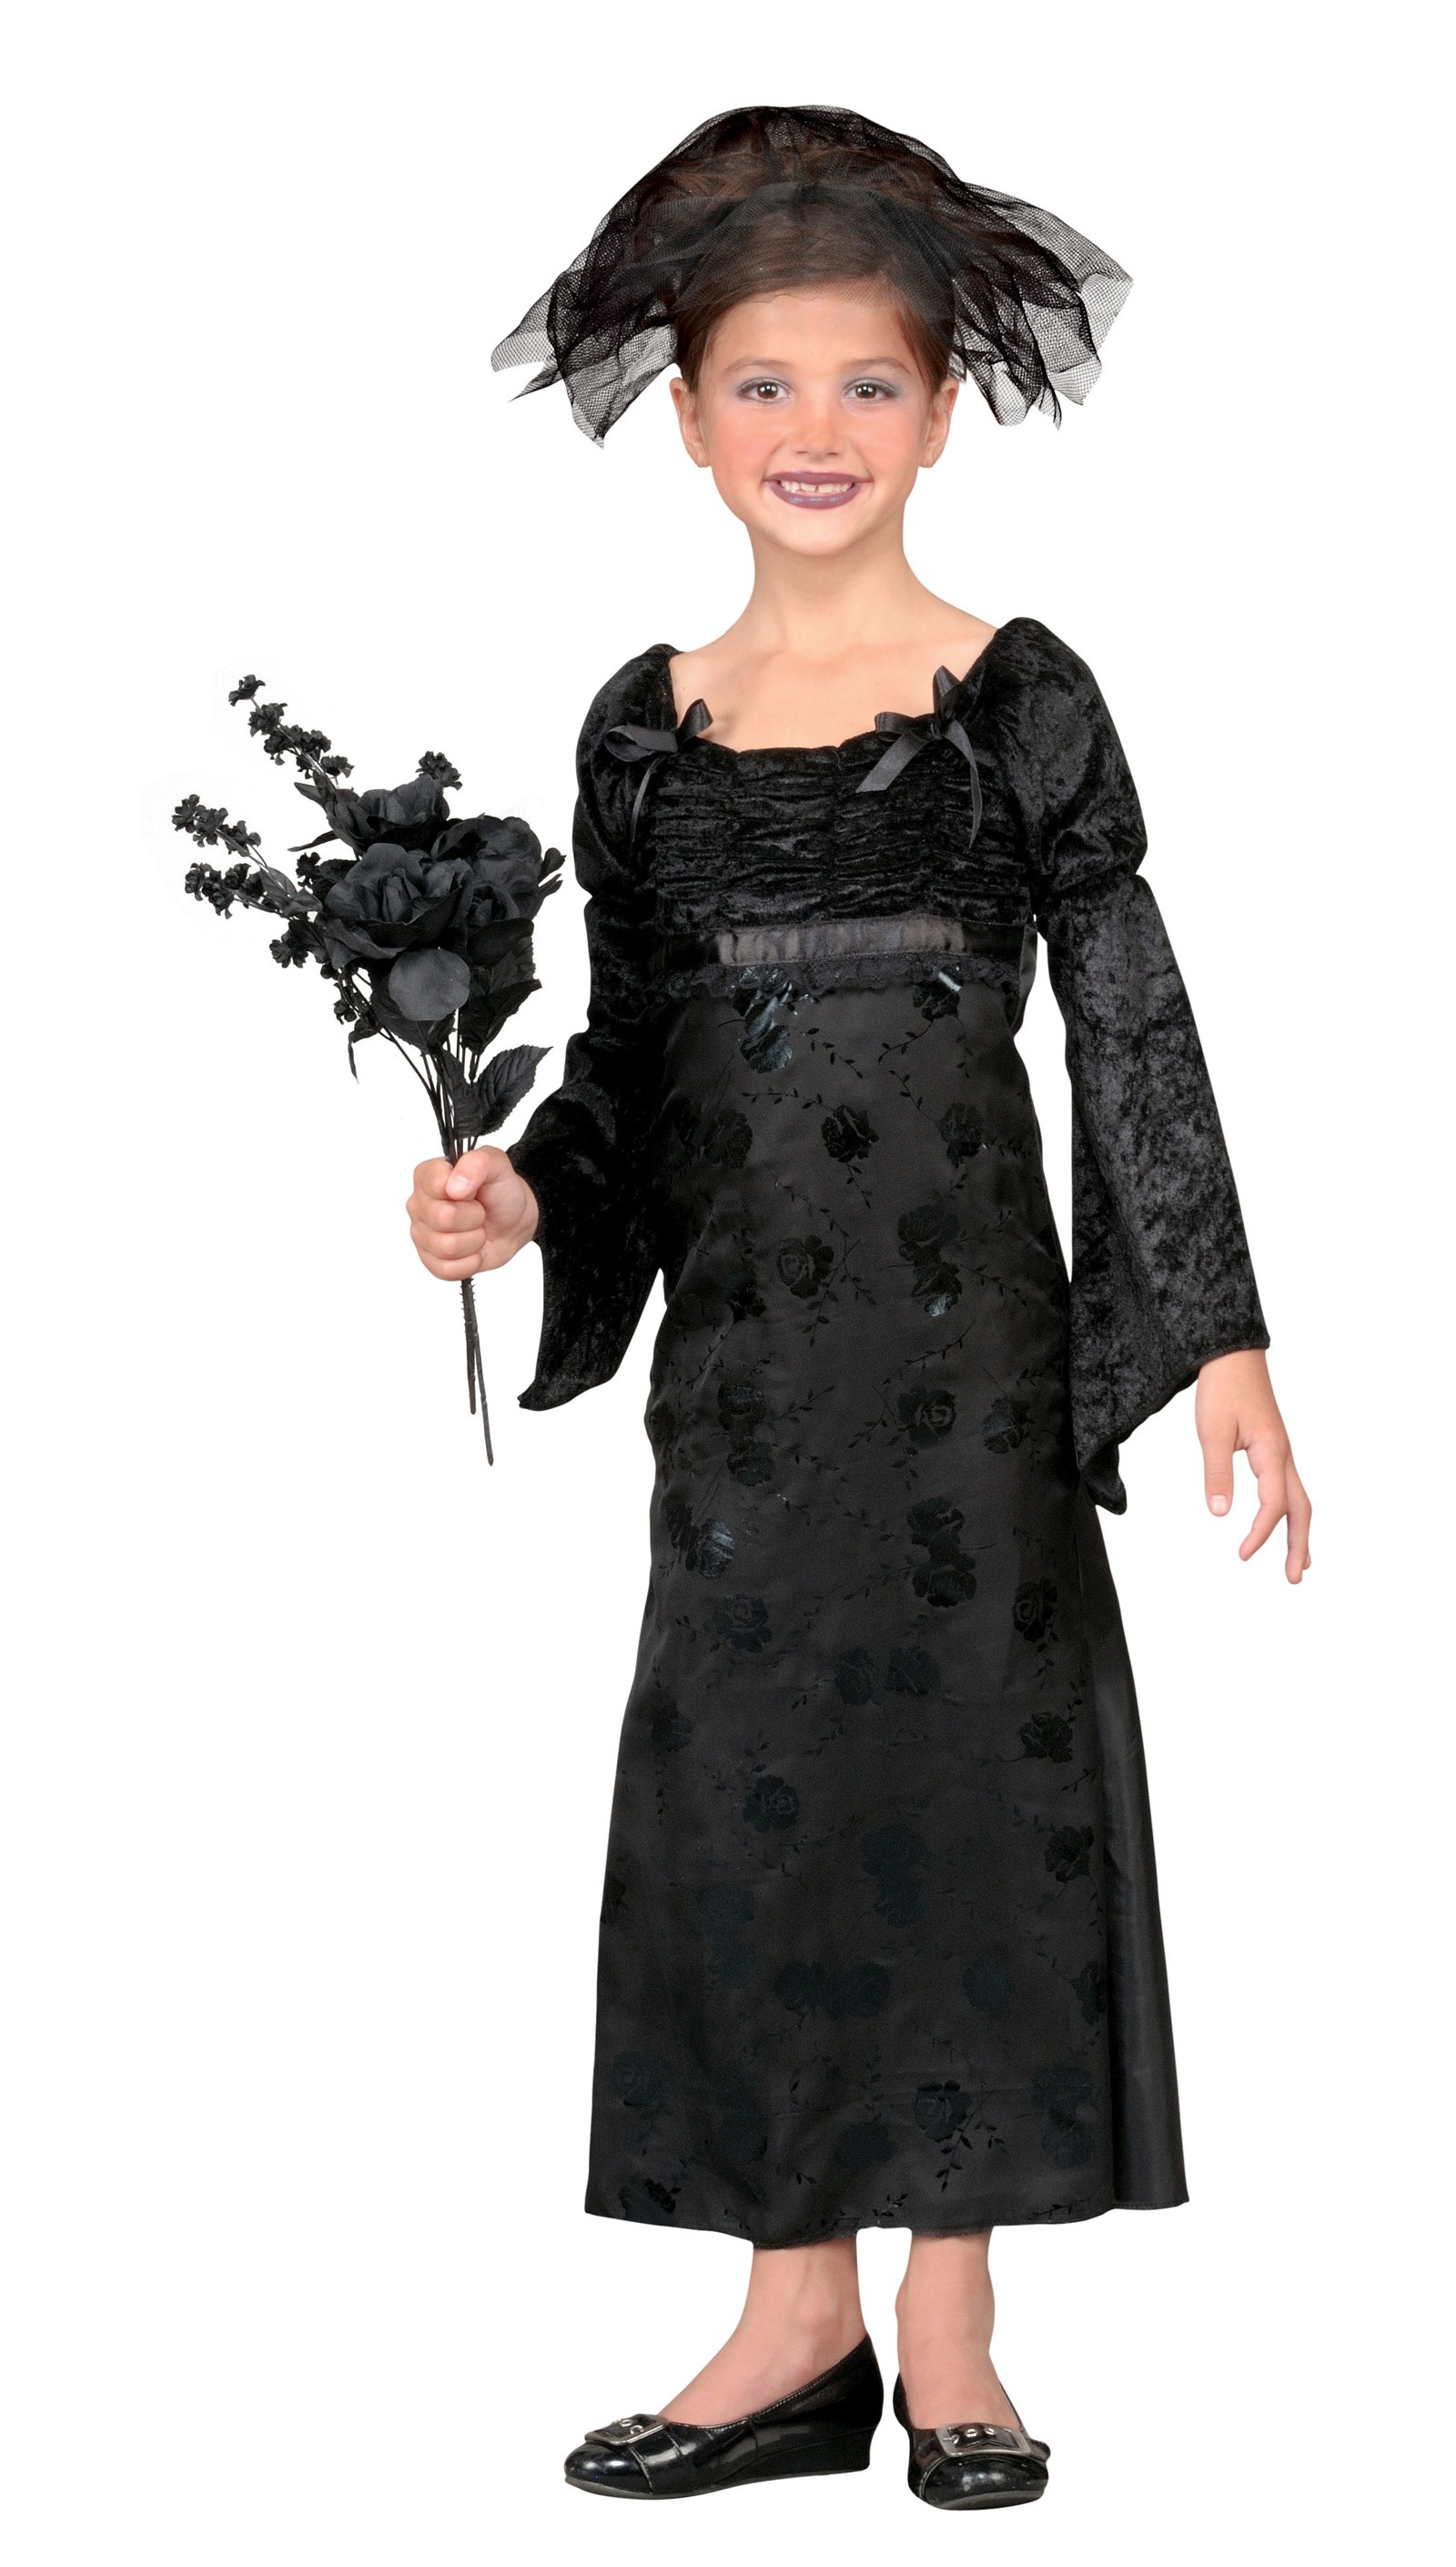 Black Widow Child Costume